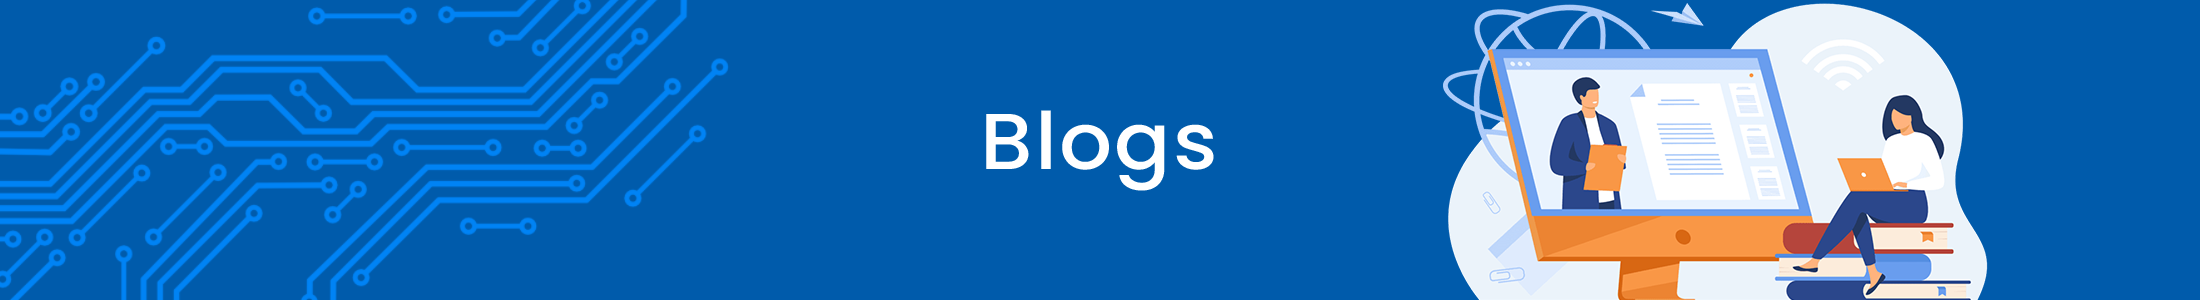 blogs(banner)